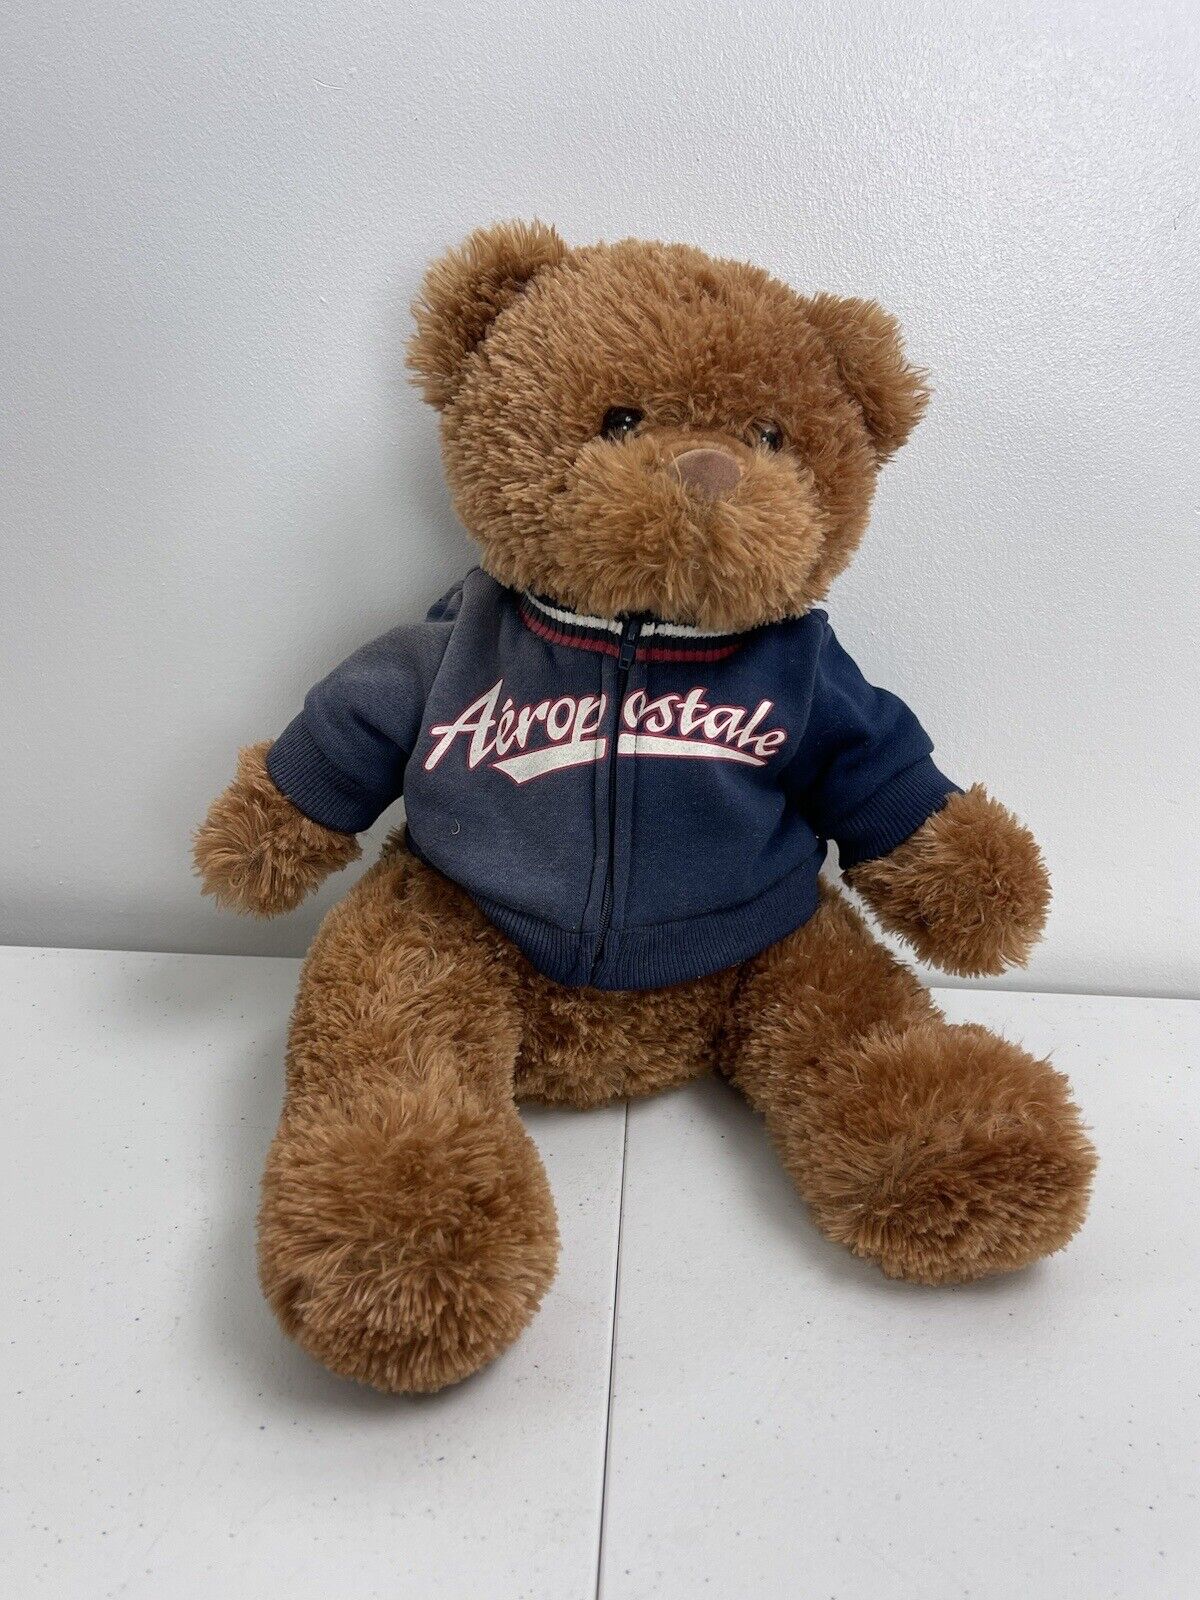 Aeropostale Vintage bear plush Teddy bear